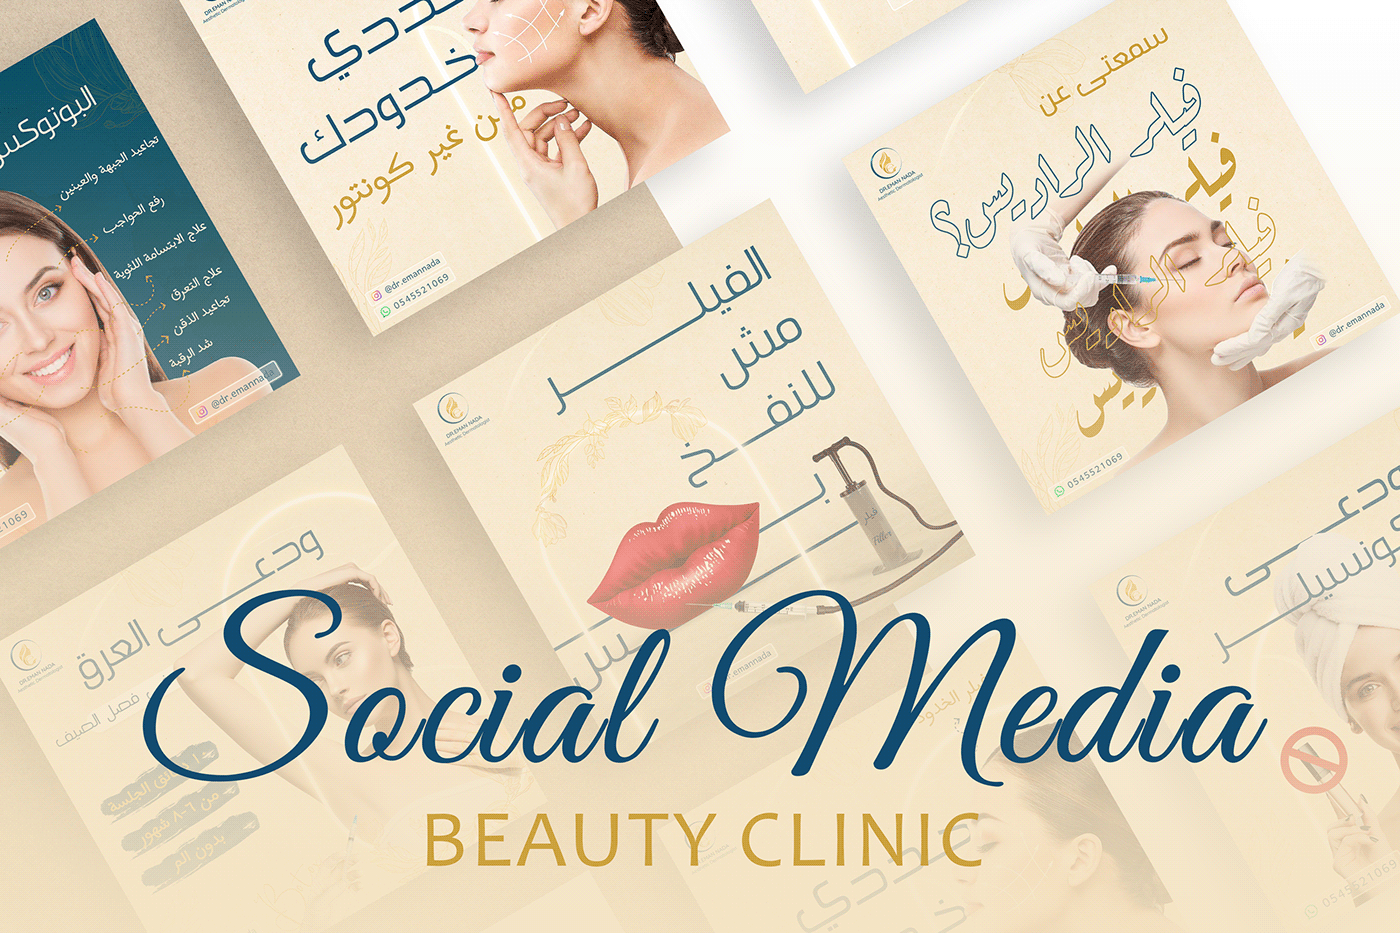 beauty clinic dermatologist dermatology doctor Health photoshop social media Social media post women